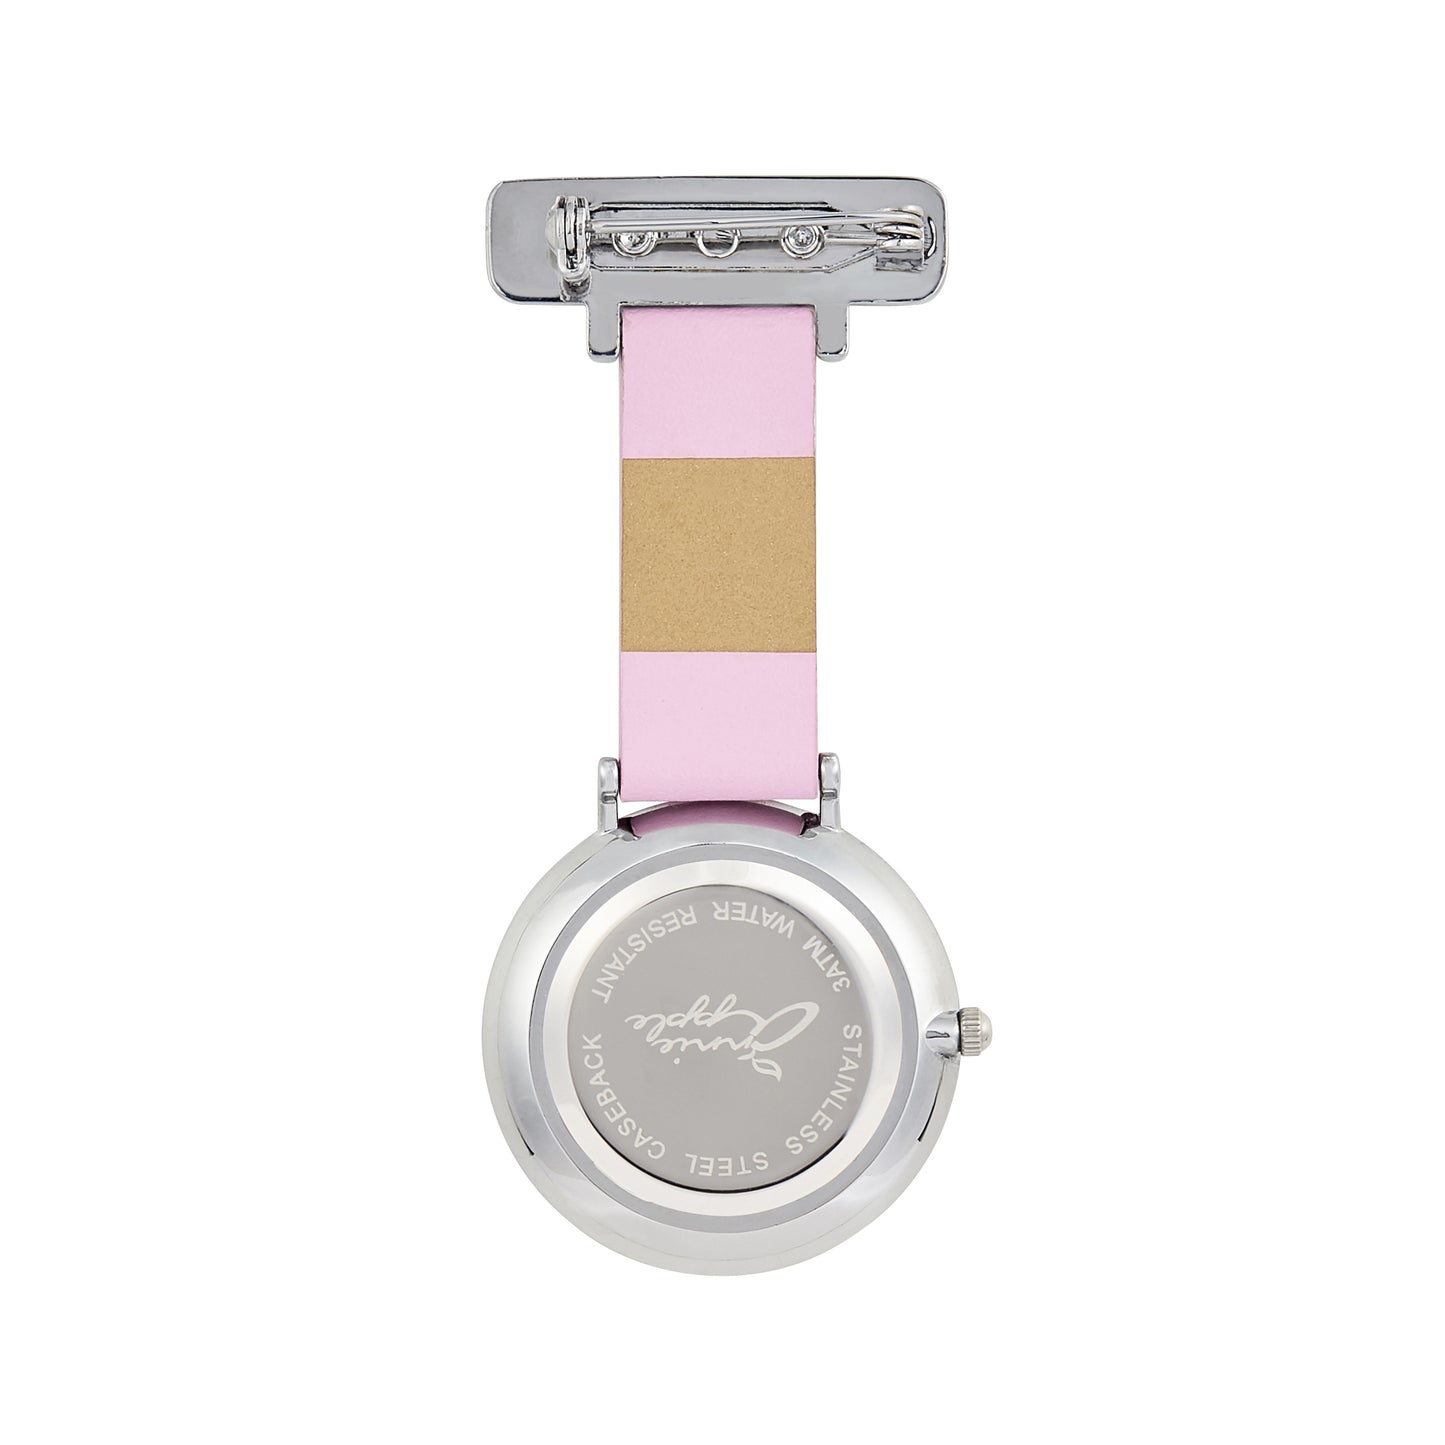 Annie Apple Nurses Fob Watch - Aurora - White/Silver/Pink - Leather - 35mm